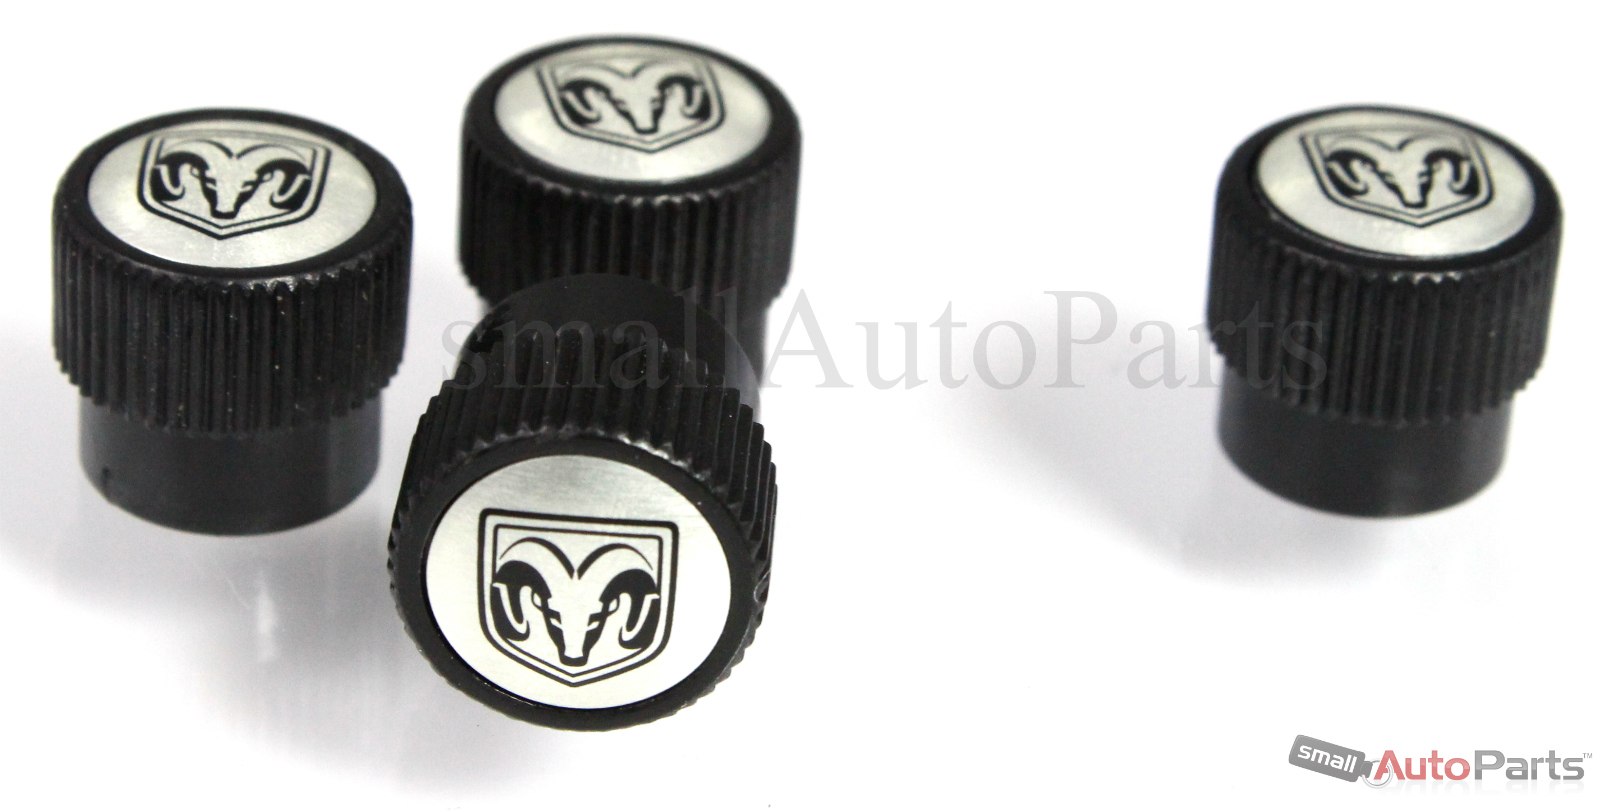 auto parts store logo Dodge Silver Logo Black ABS Tire/Wheel Stem air Valve CAPS set